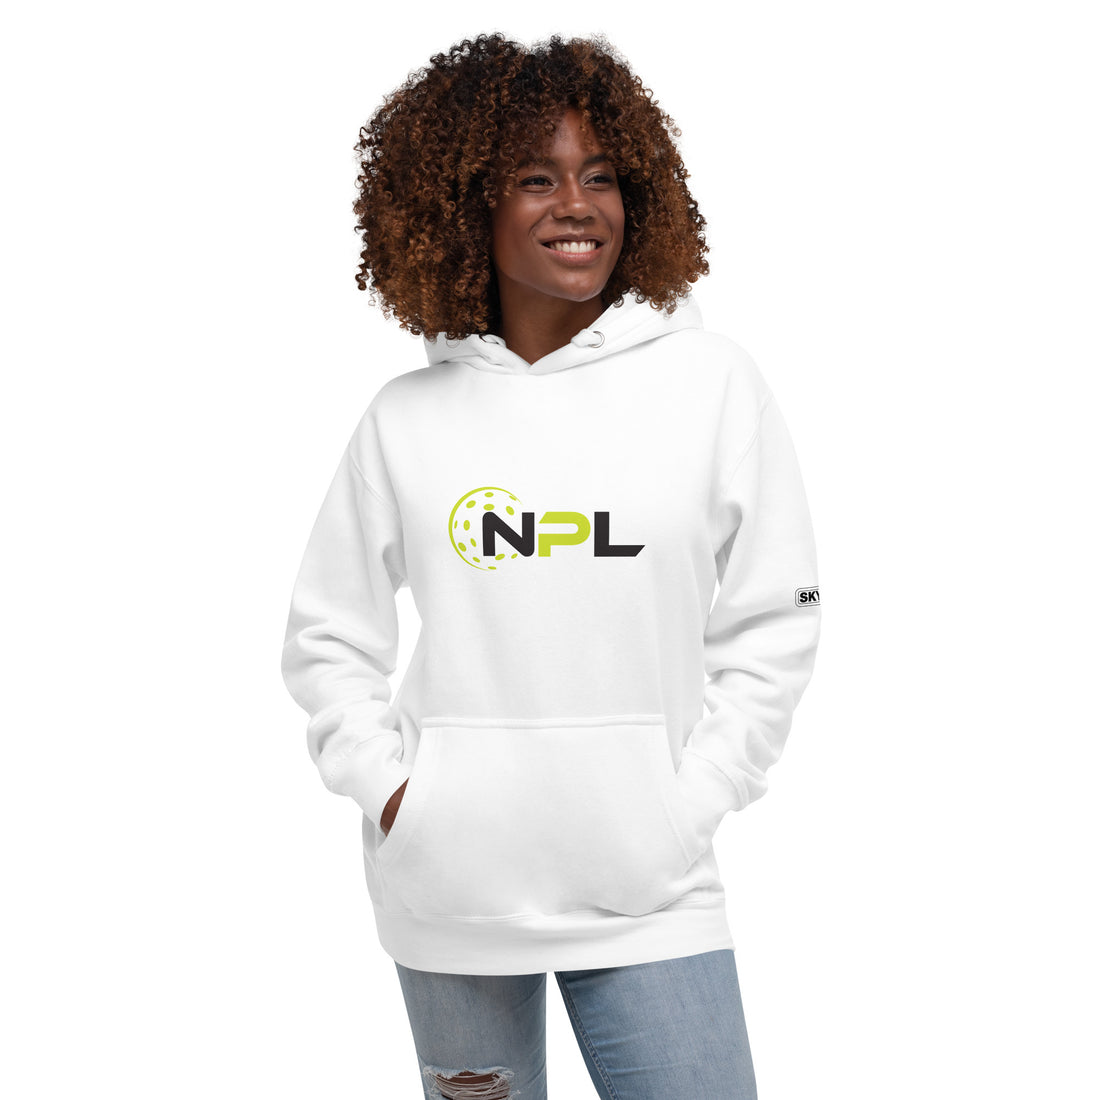 NPL™ Unisex Hoodie 100% Cotton Face - White